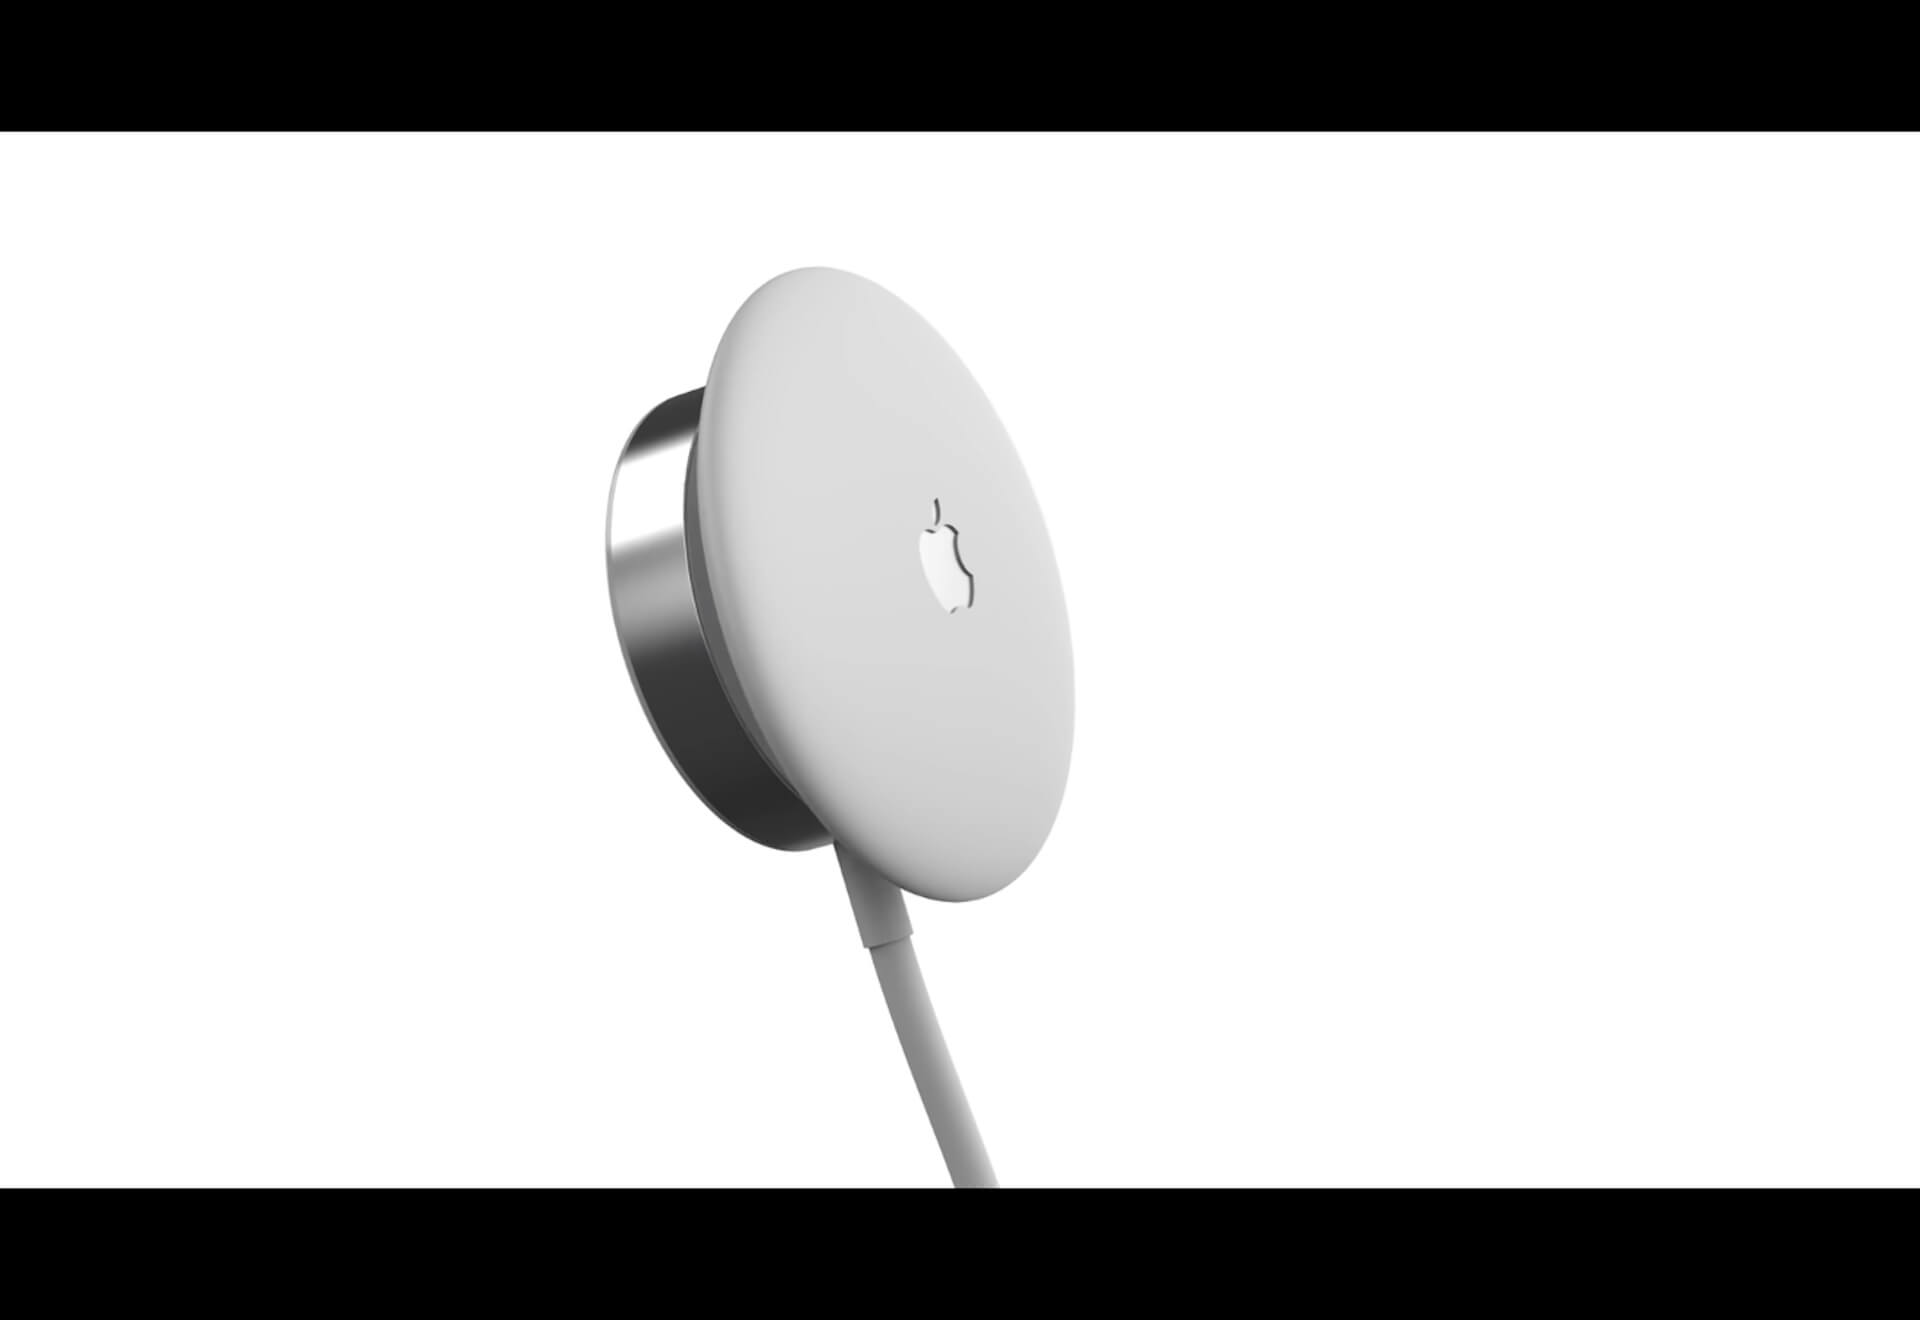 Appleのワイヤレス充電器「AirPower」のプロトタイプを収めた動画が流出？ tech200918_airpower_main